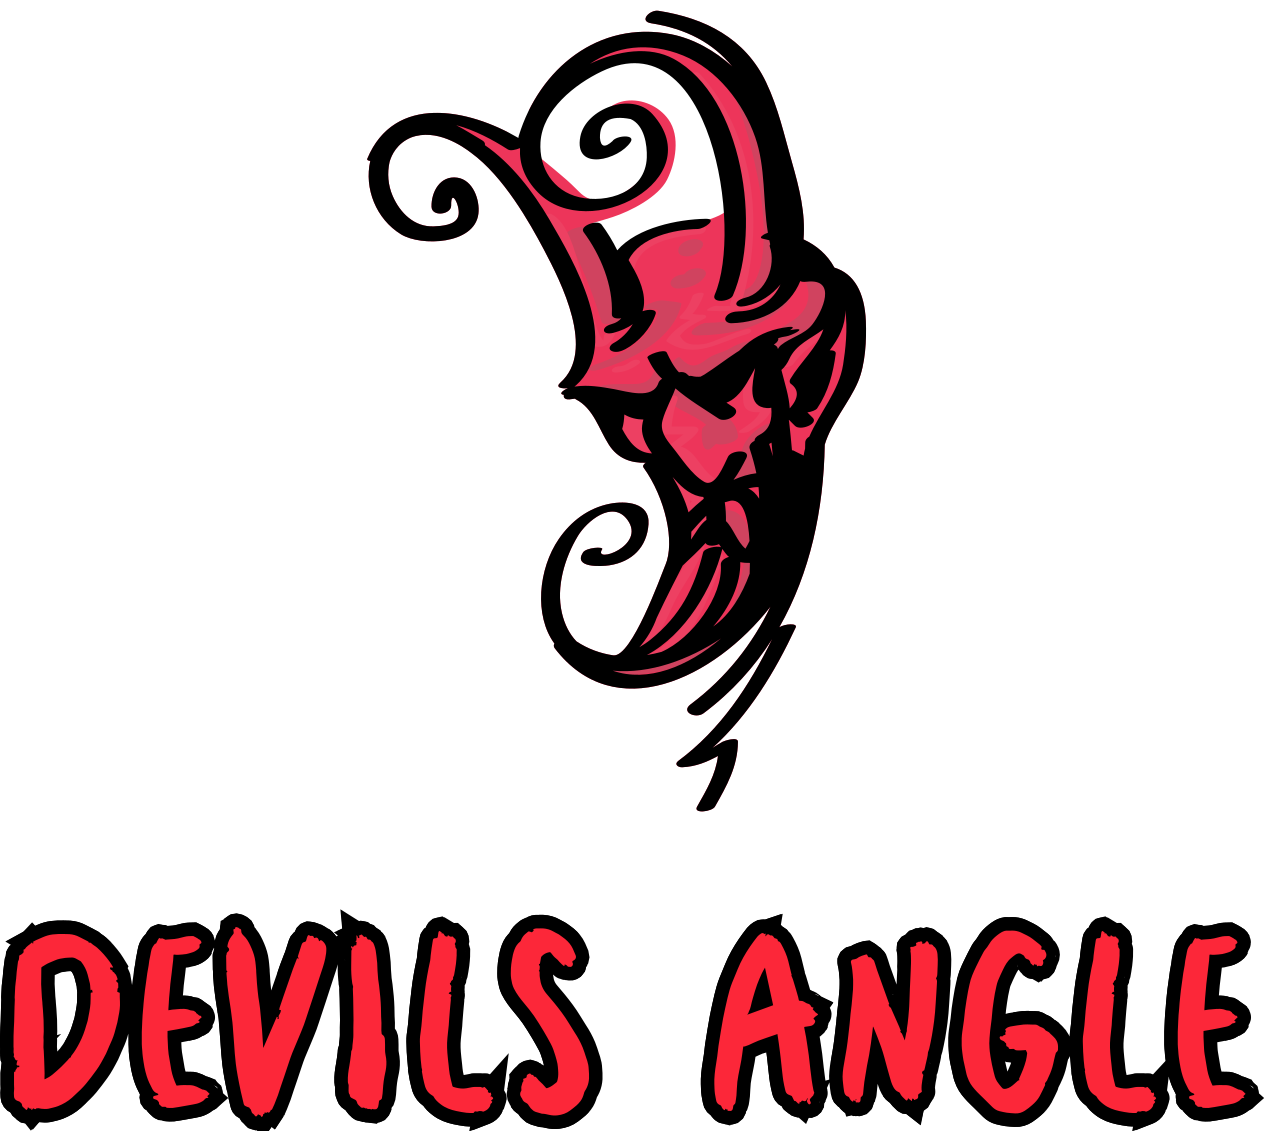 devils angle's web page